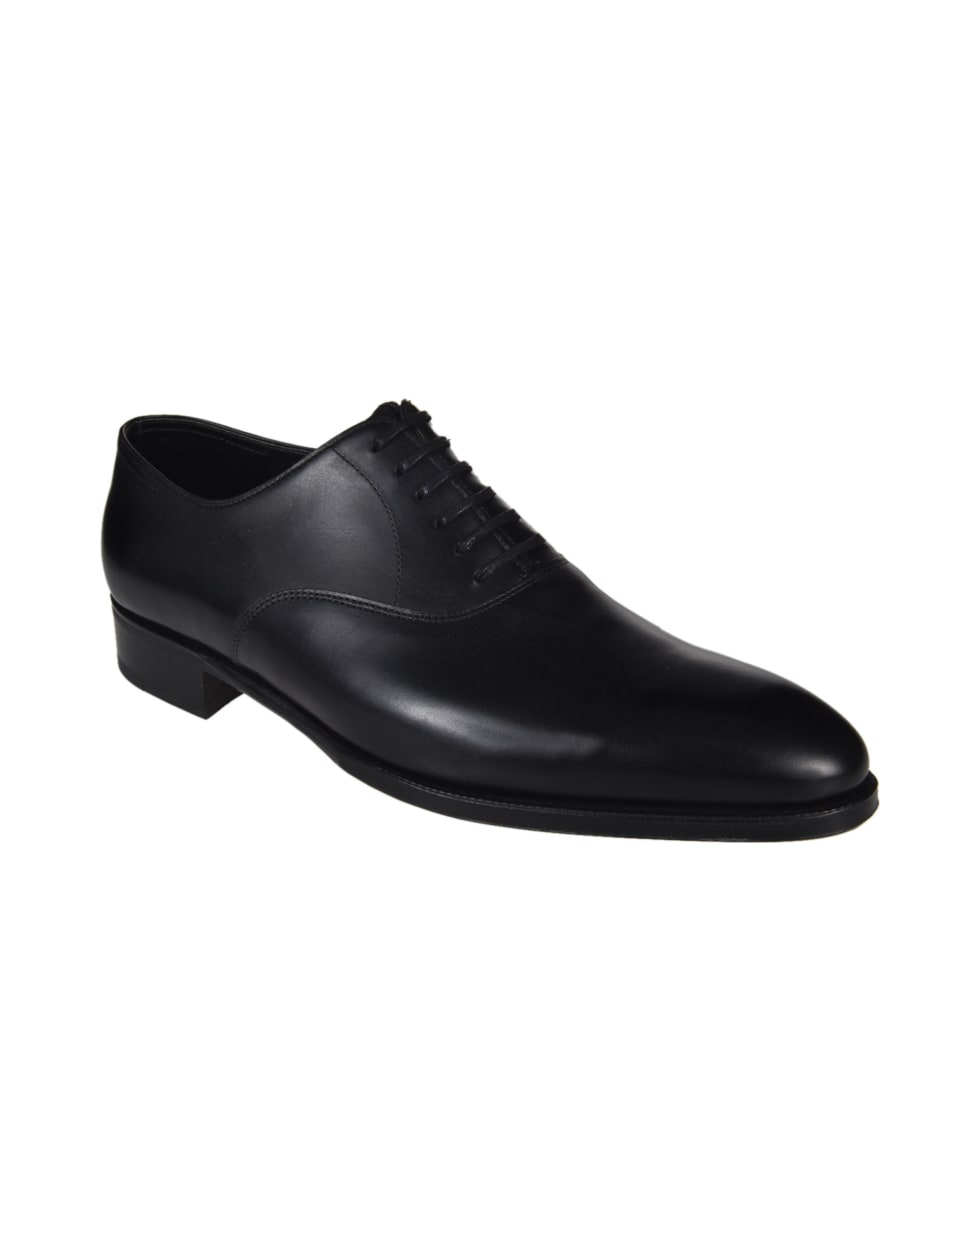 John Lobb Seaton Oxford Shoes - Black